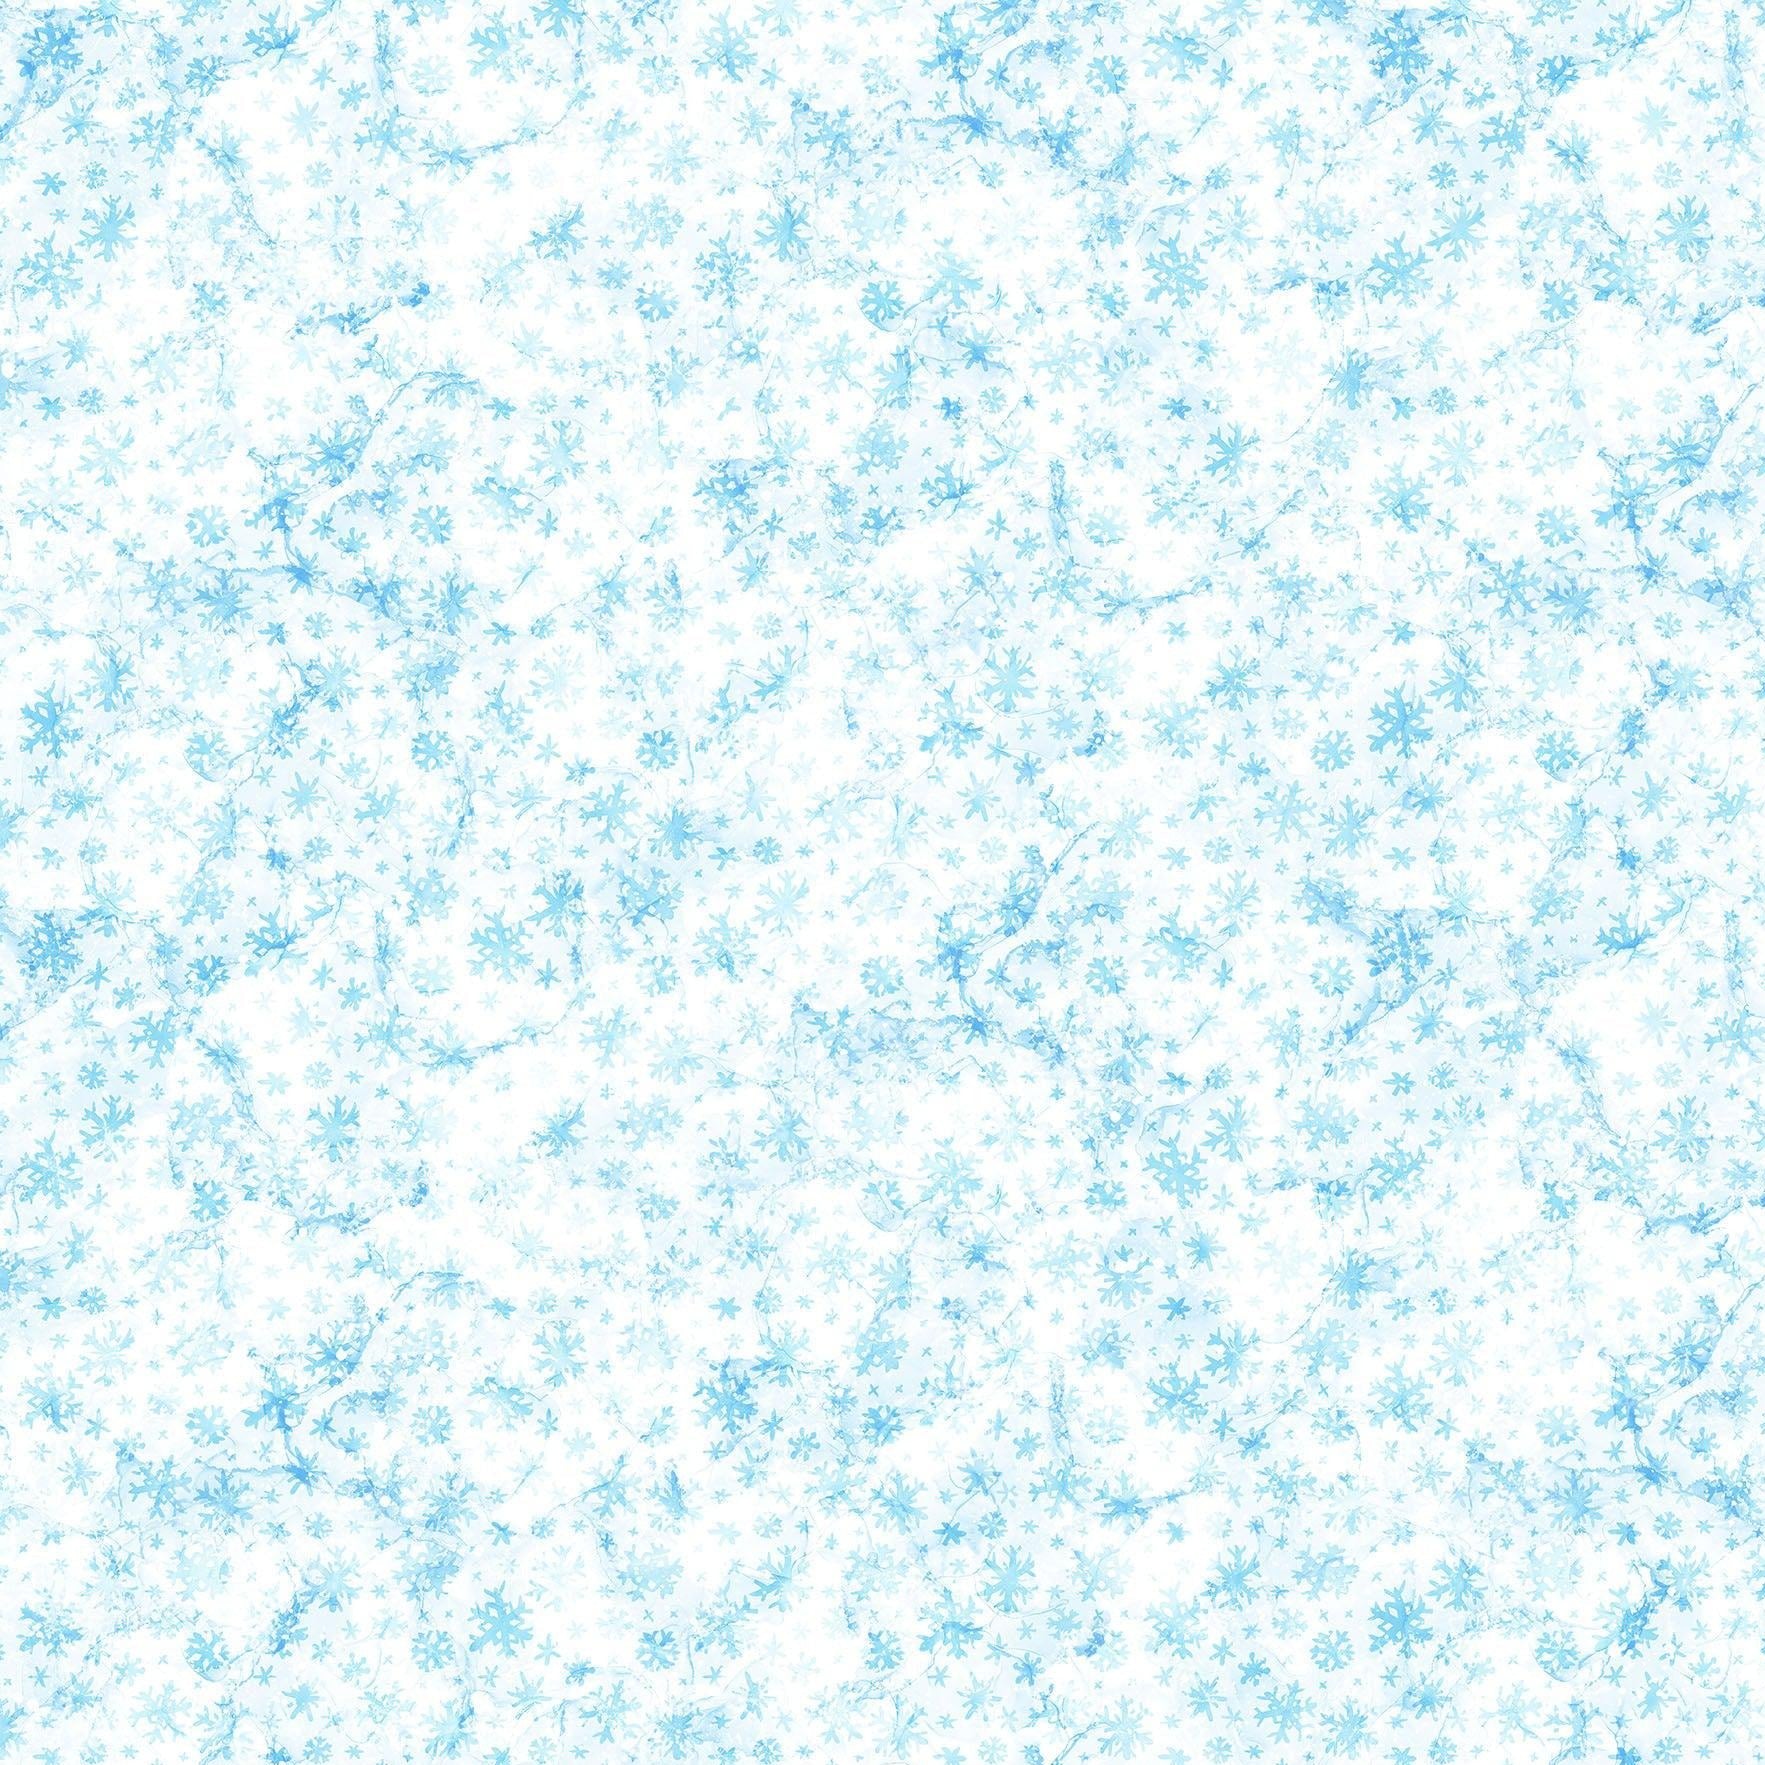 Illuminations Light Blue Snowflake Digital Print Fabric